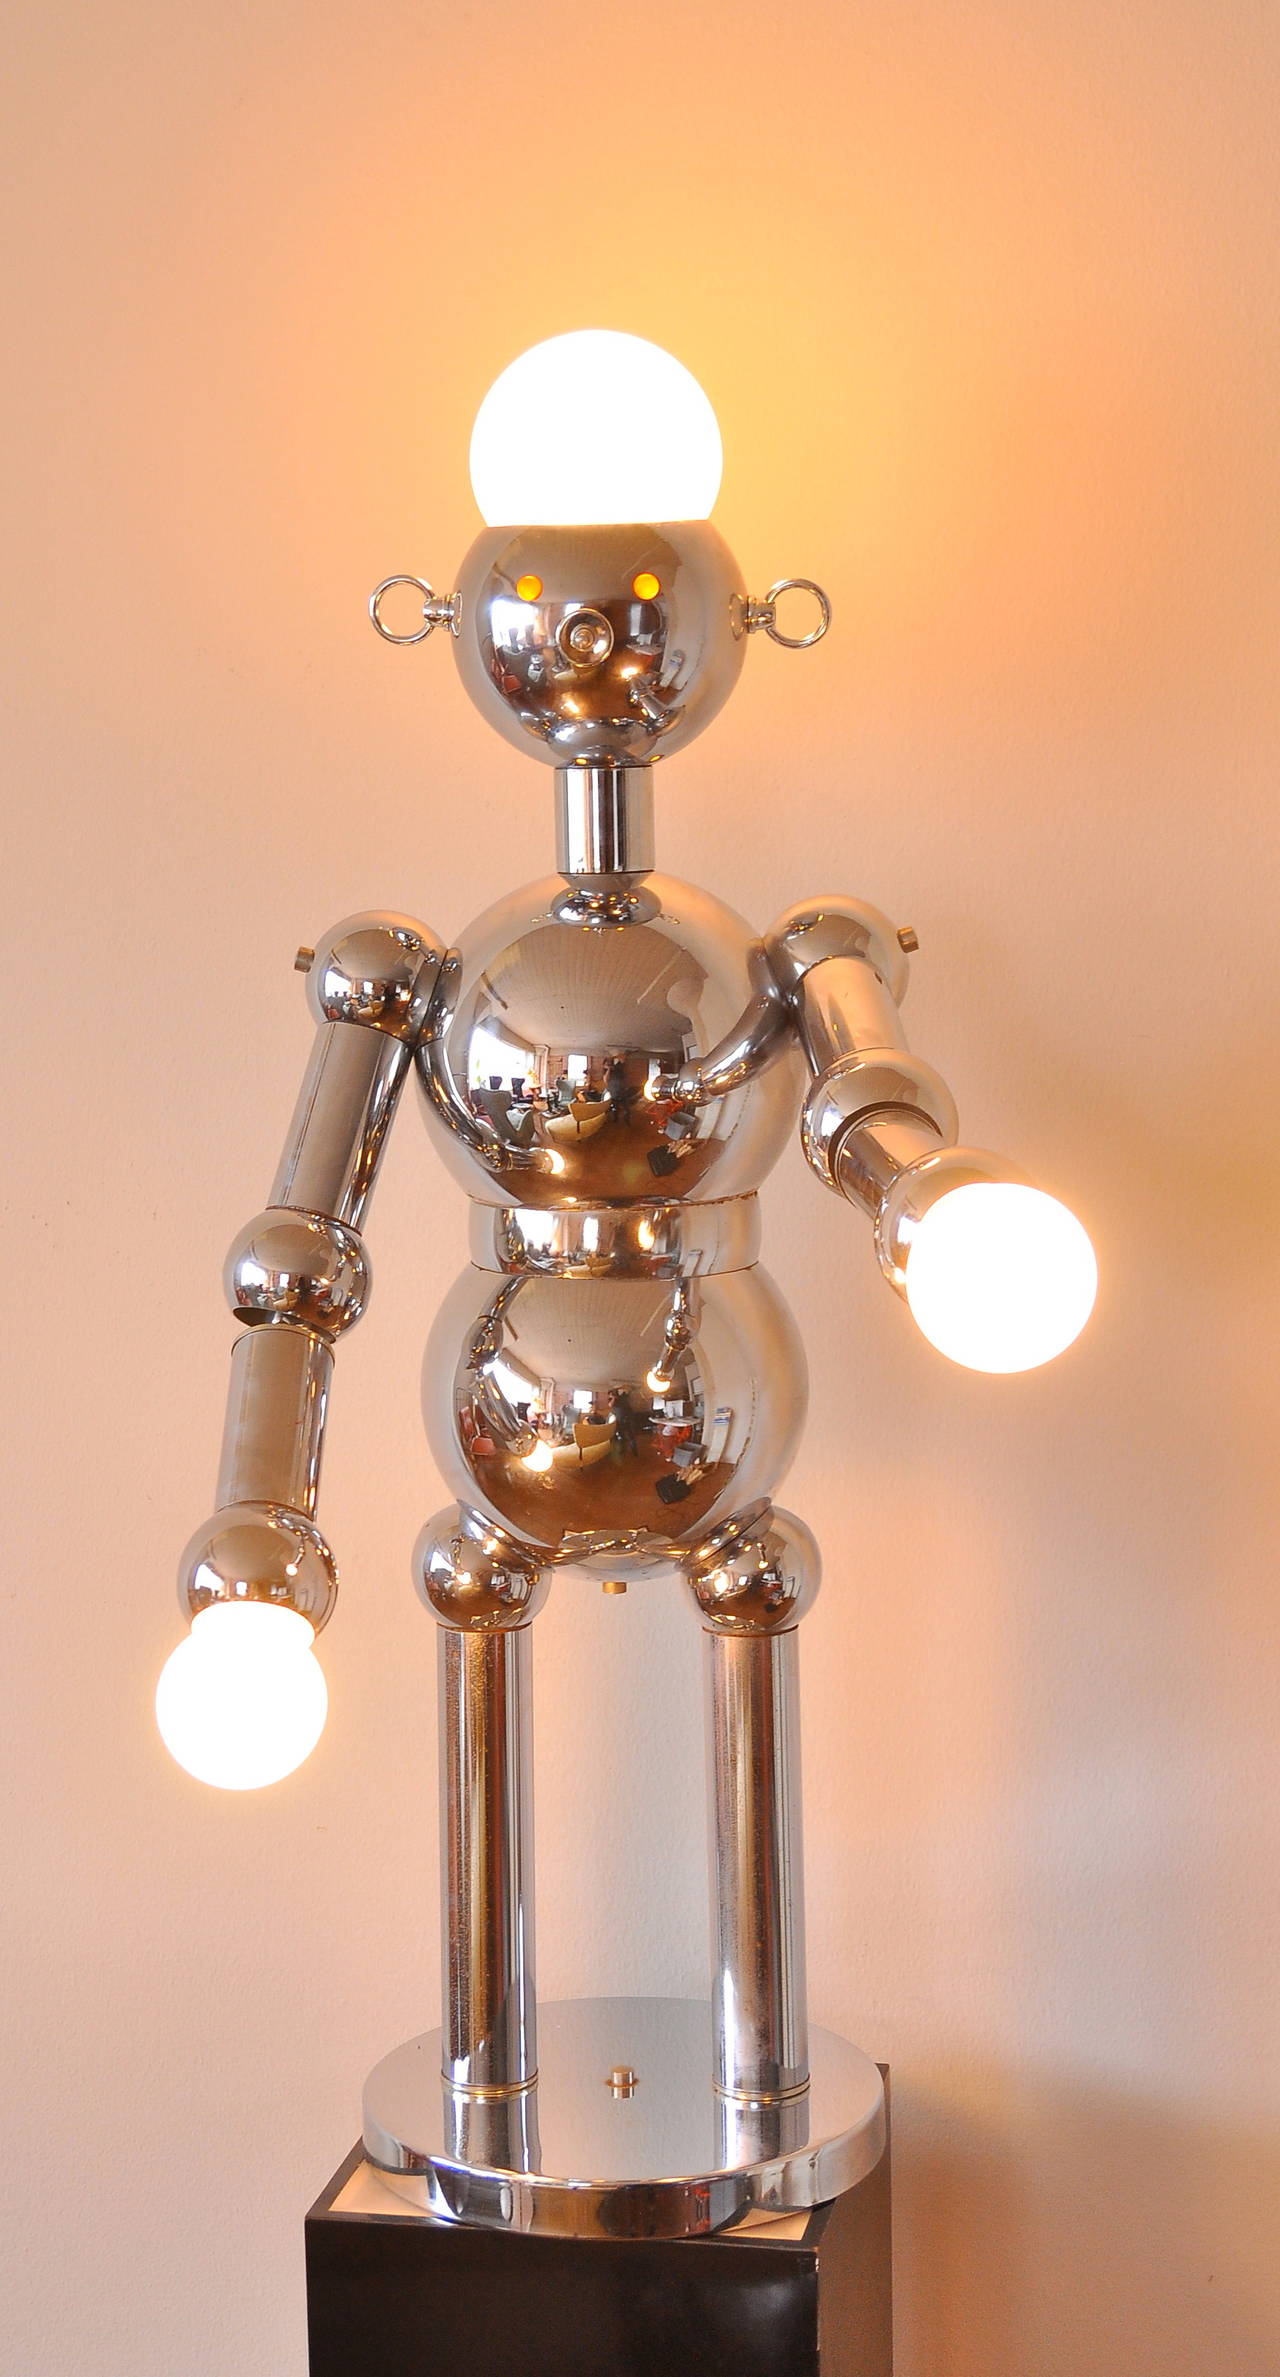 Rare articulated chrome Robot lamp.
37